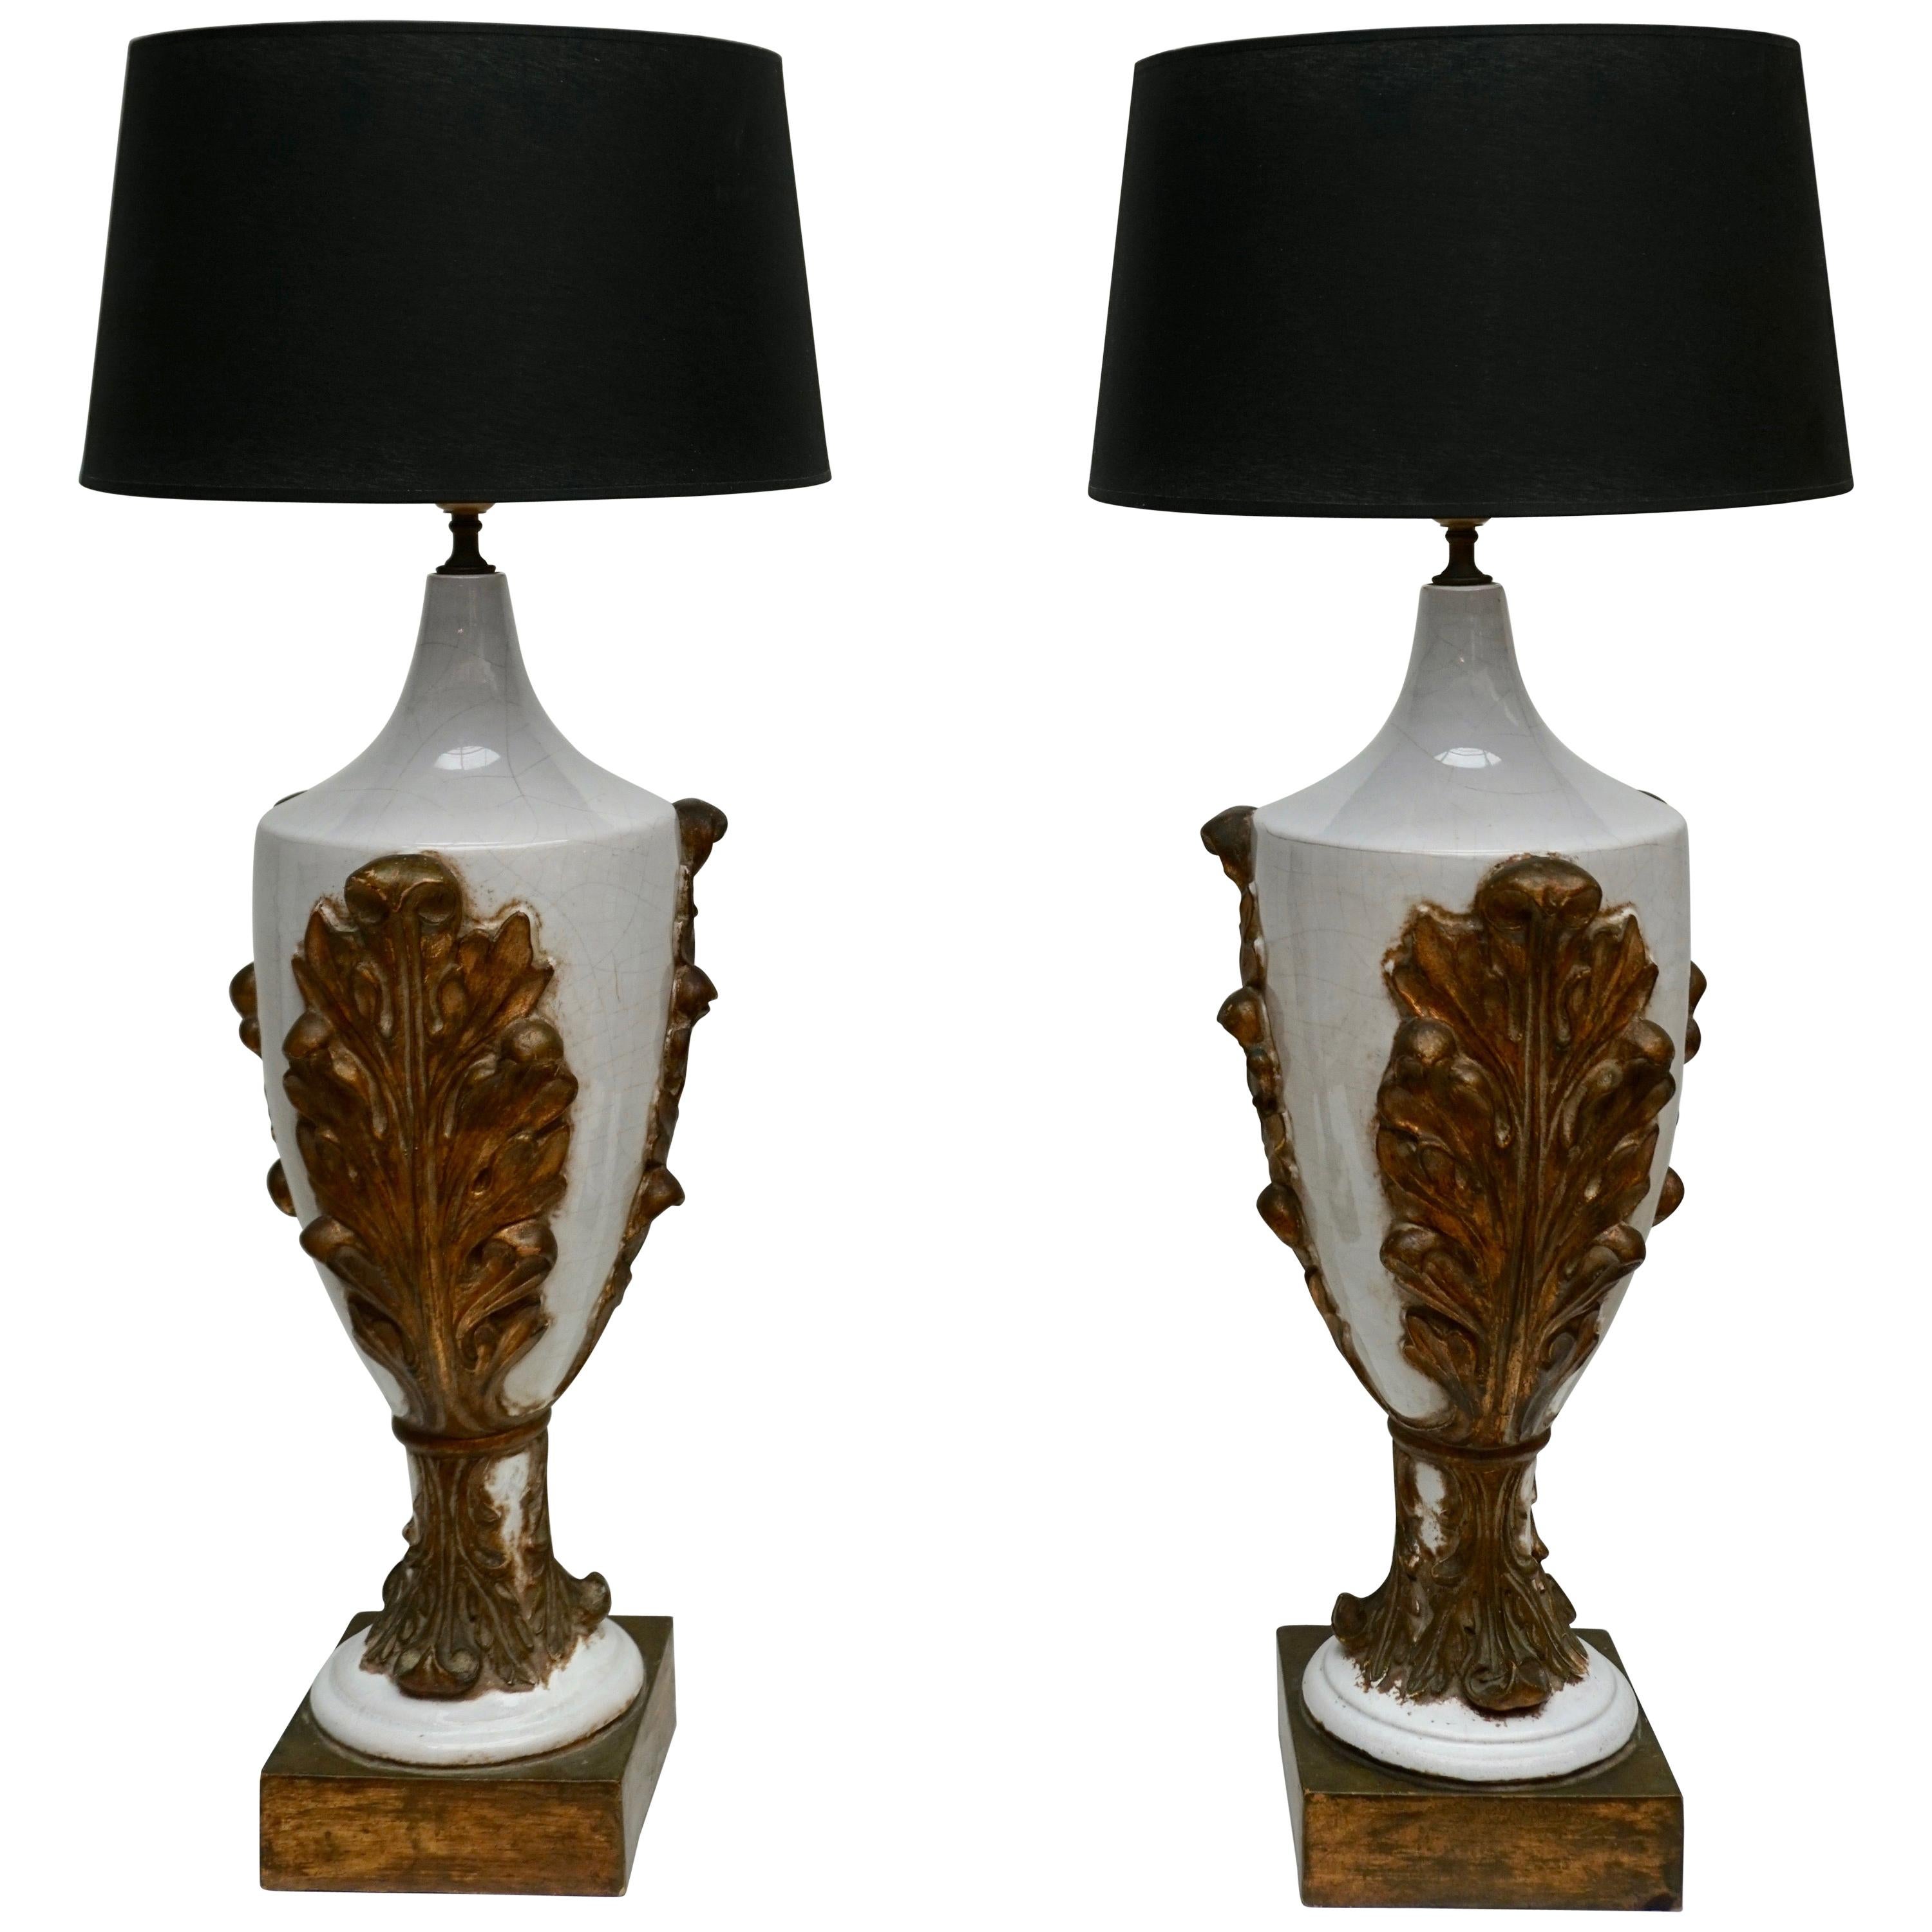 Two Italian Ceramic Table Lamps